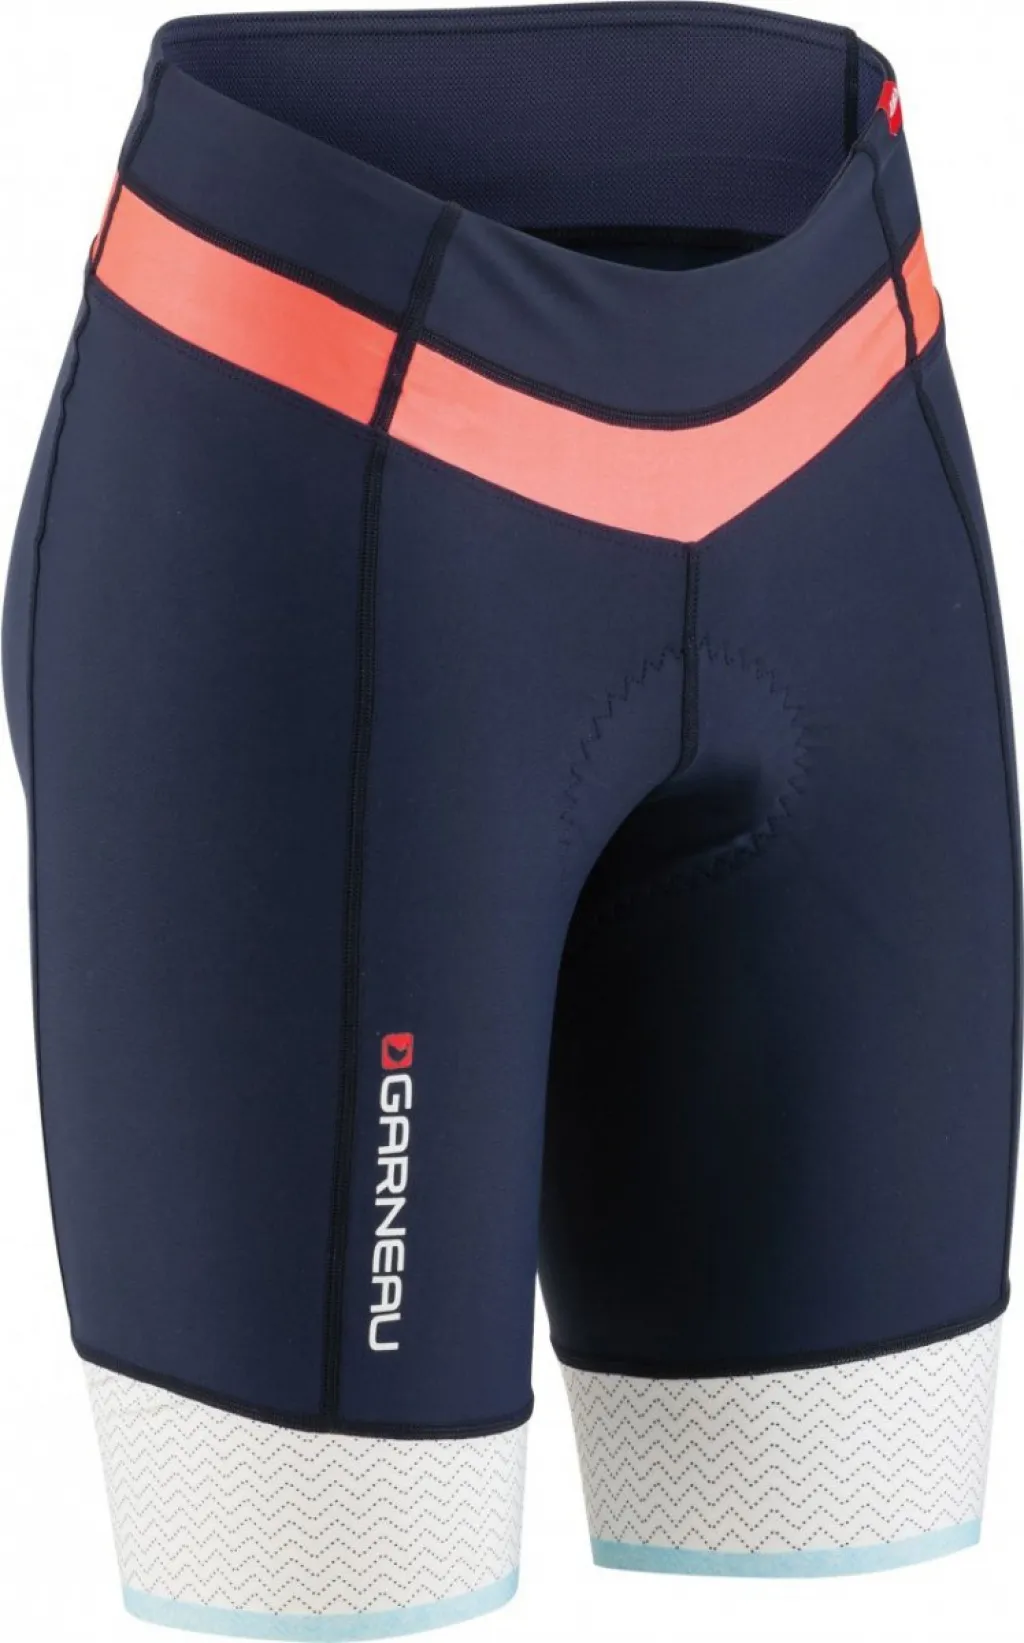 Шорты Garneau Women's Equipe Cycling Shorts синие